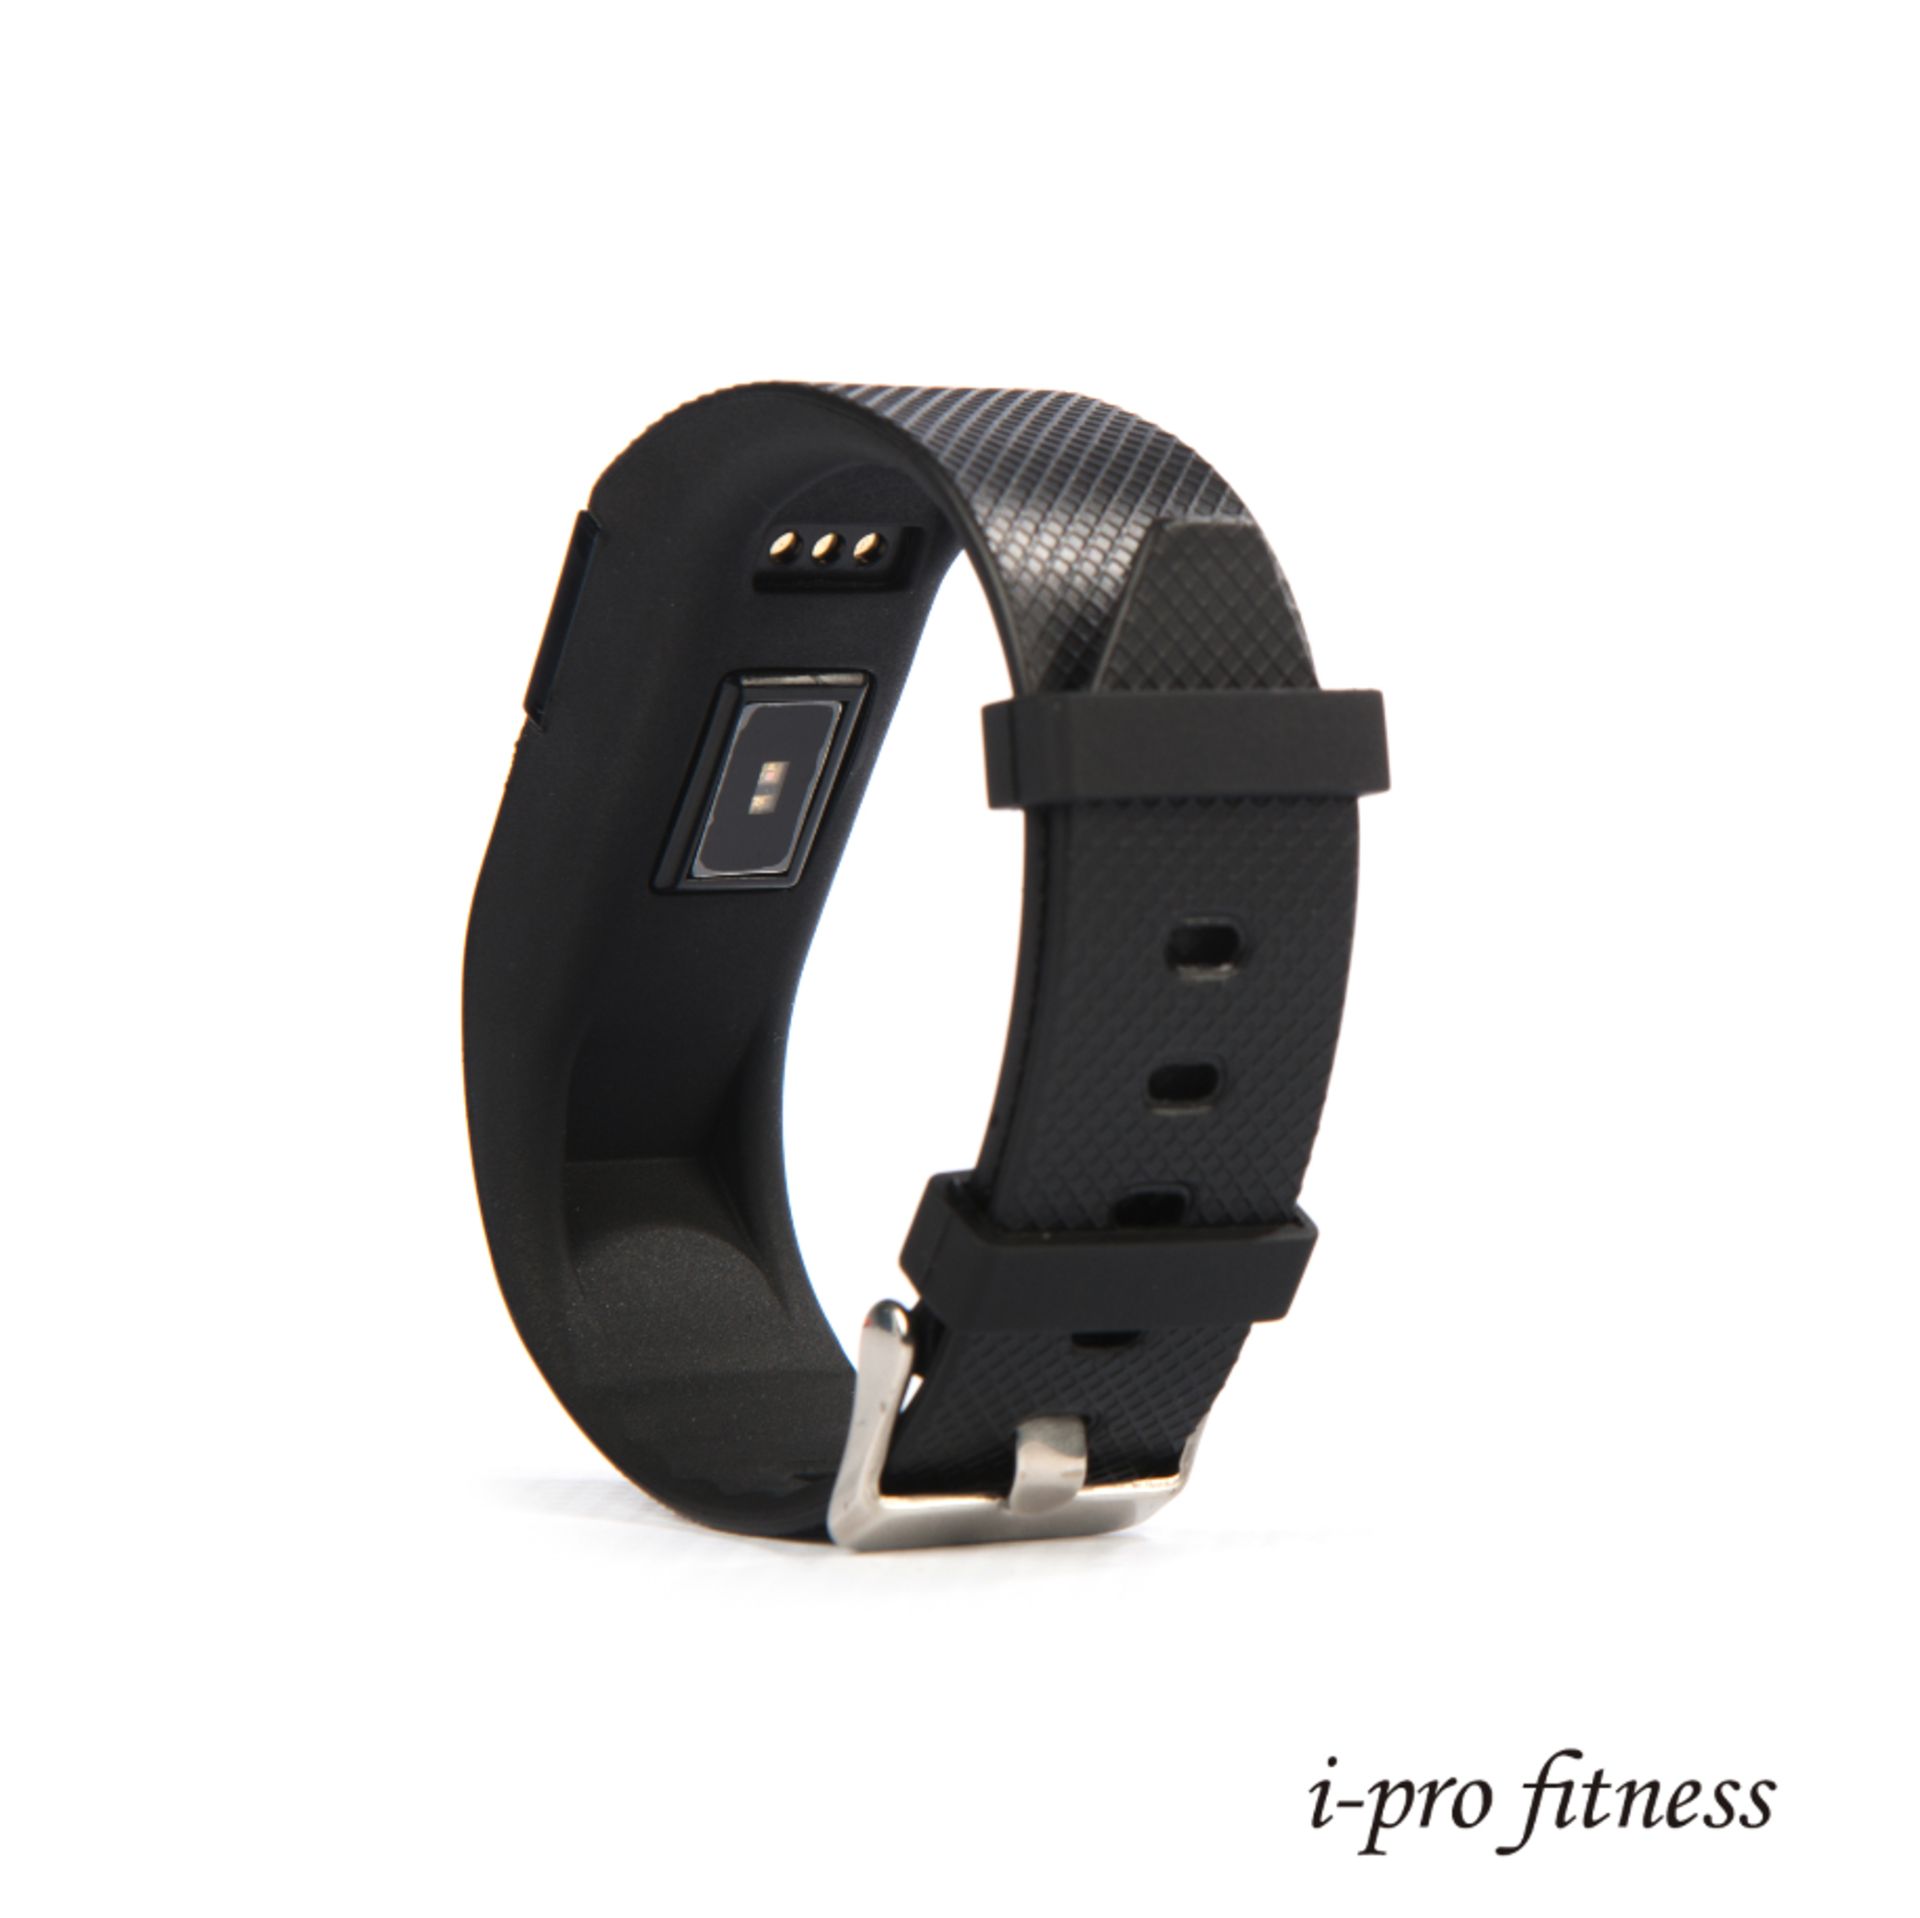 **Trade lot** 50 x Units Fitness Tracker i-pro fitness, Bluetooth 4.0 Sports Smart Bracelet - Image 3 of 8